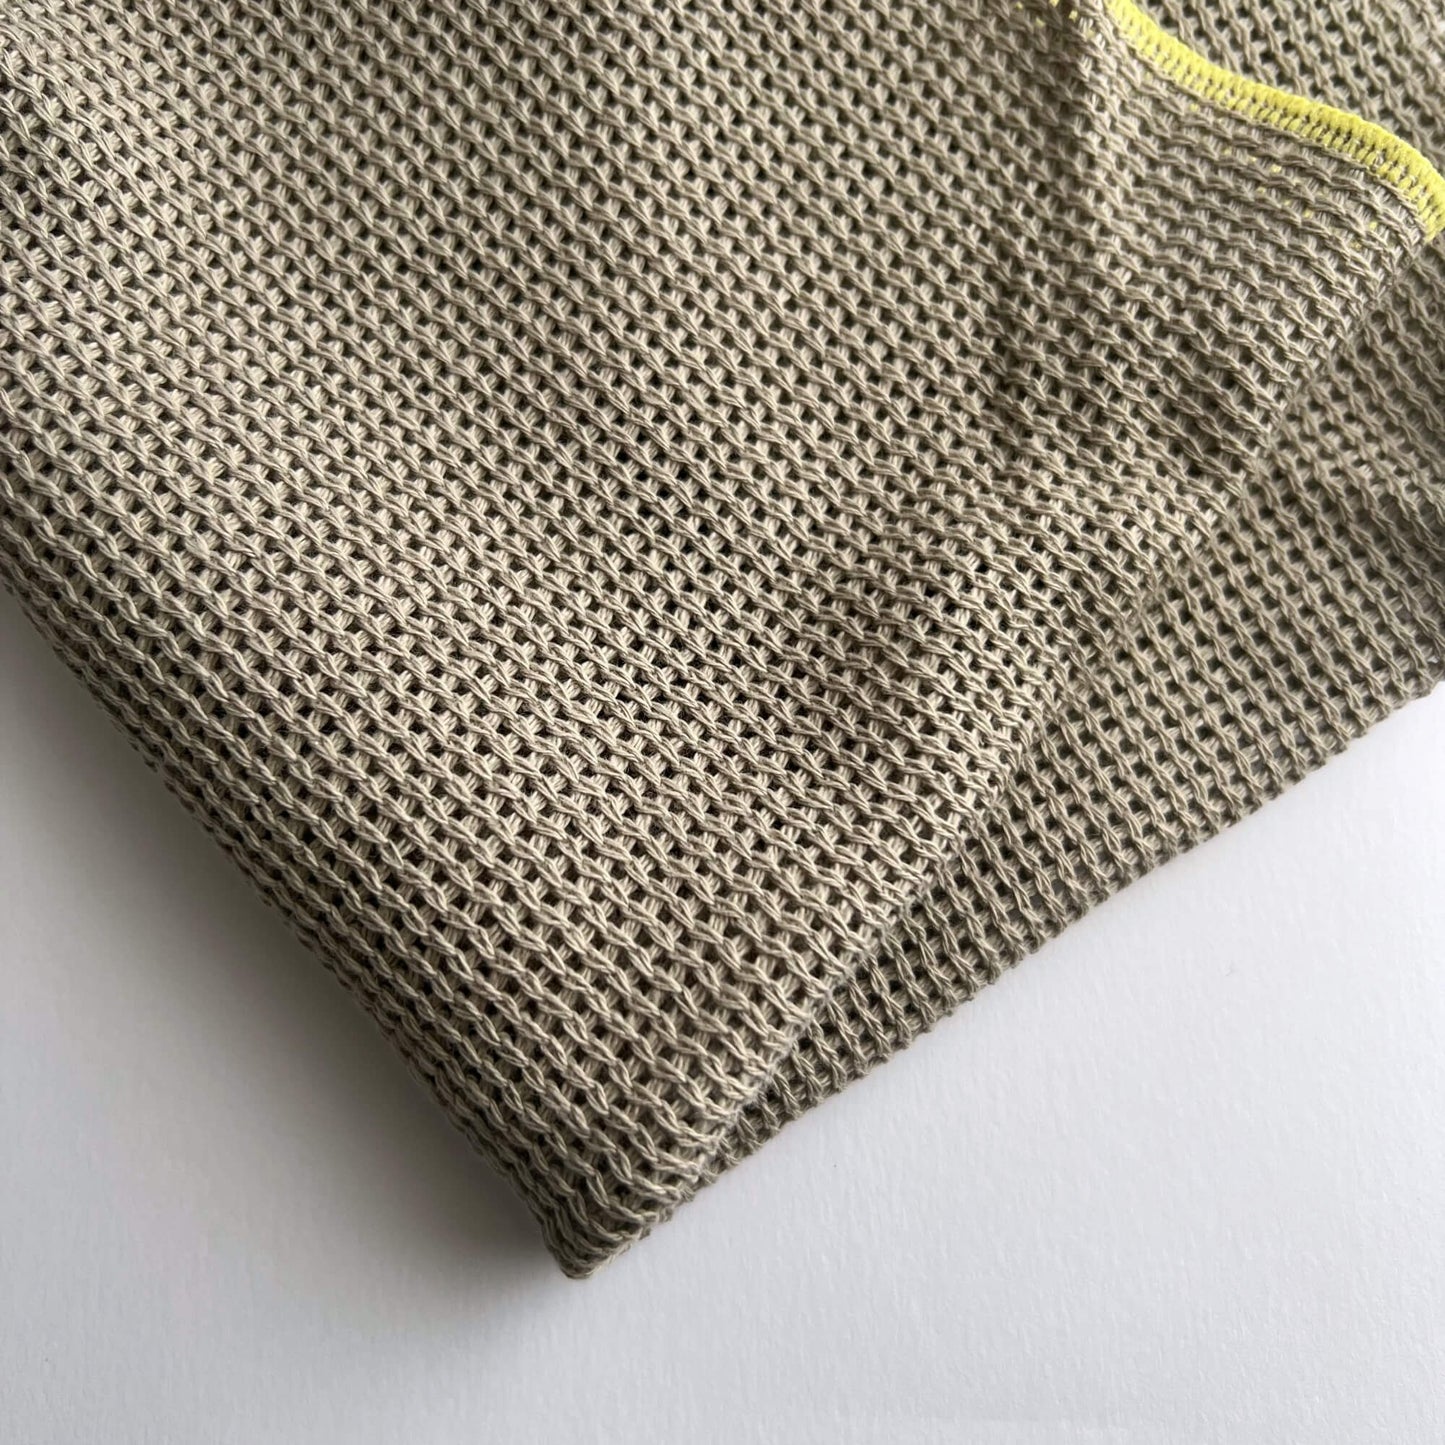 kiyoi : cotton mesh cloth